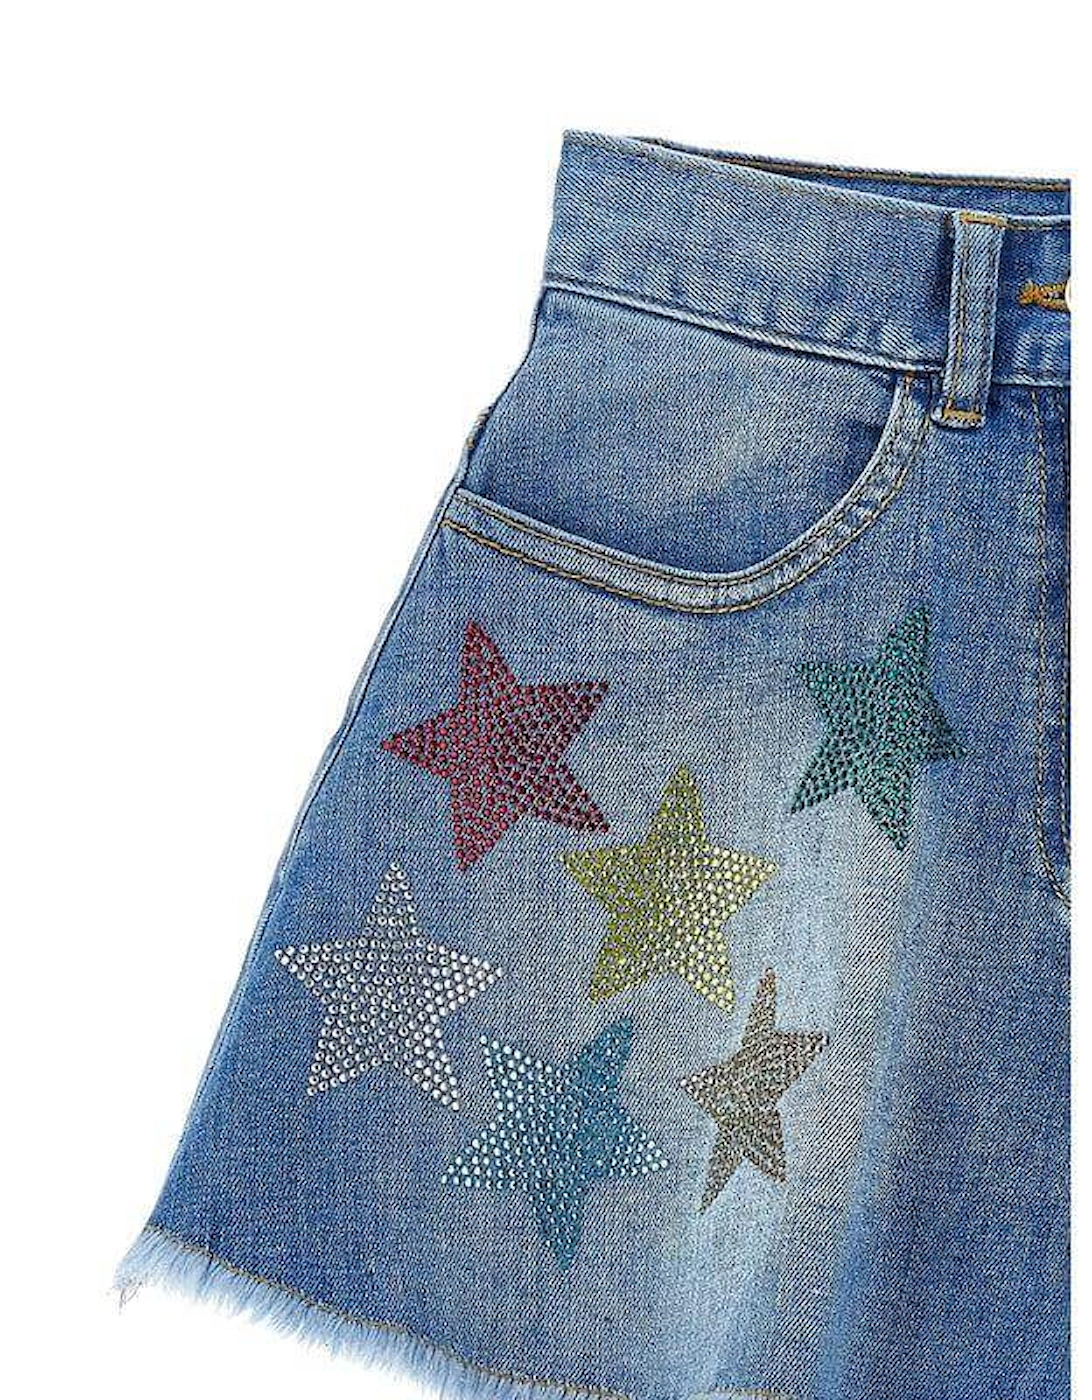 Girls Denim Star Shorts